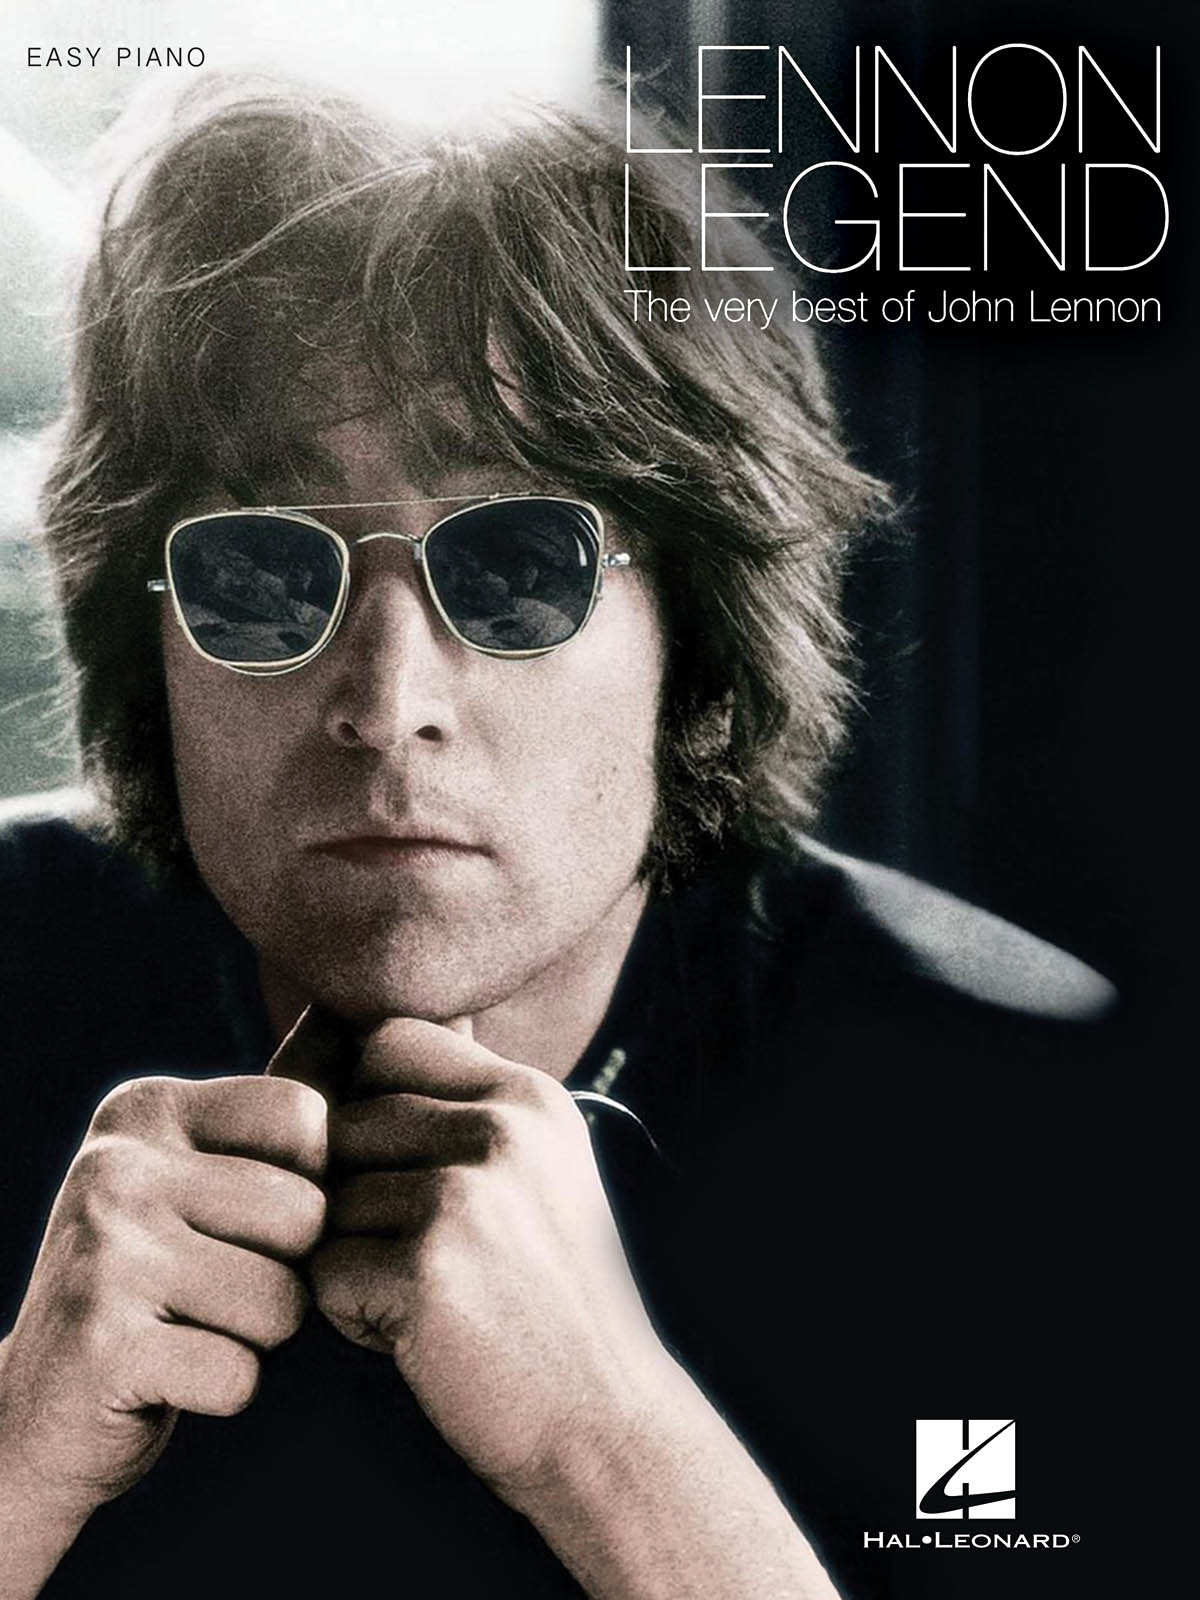 The Very Best of John Lennon (Easy Piano)